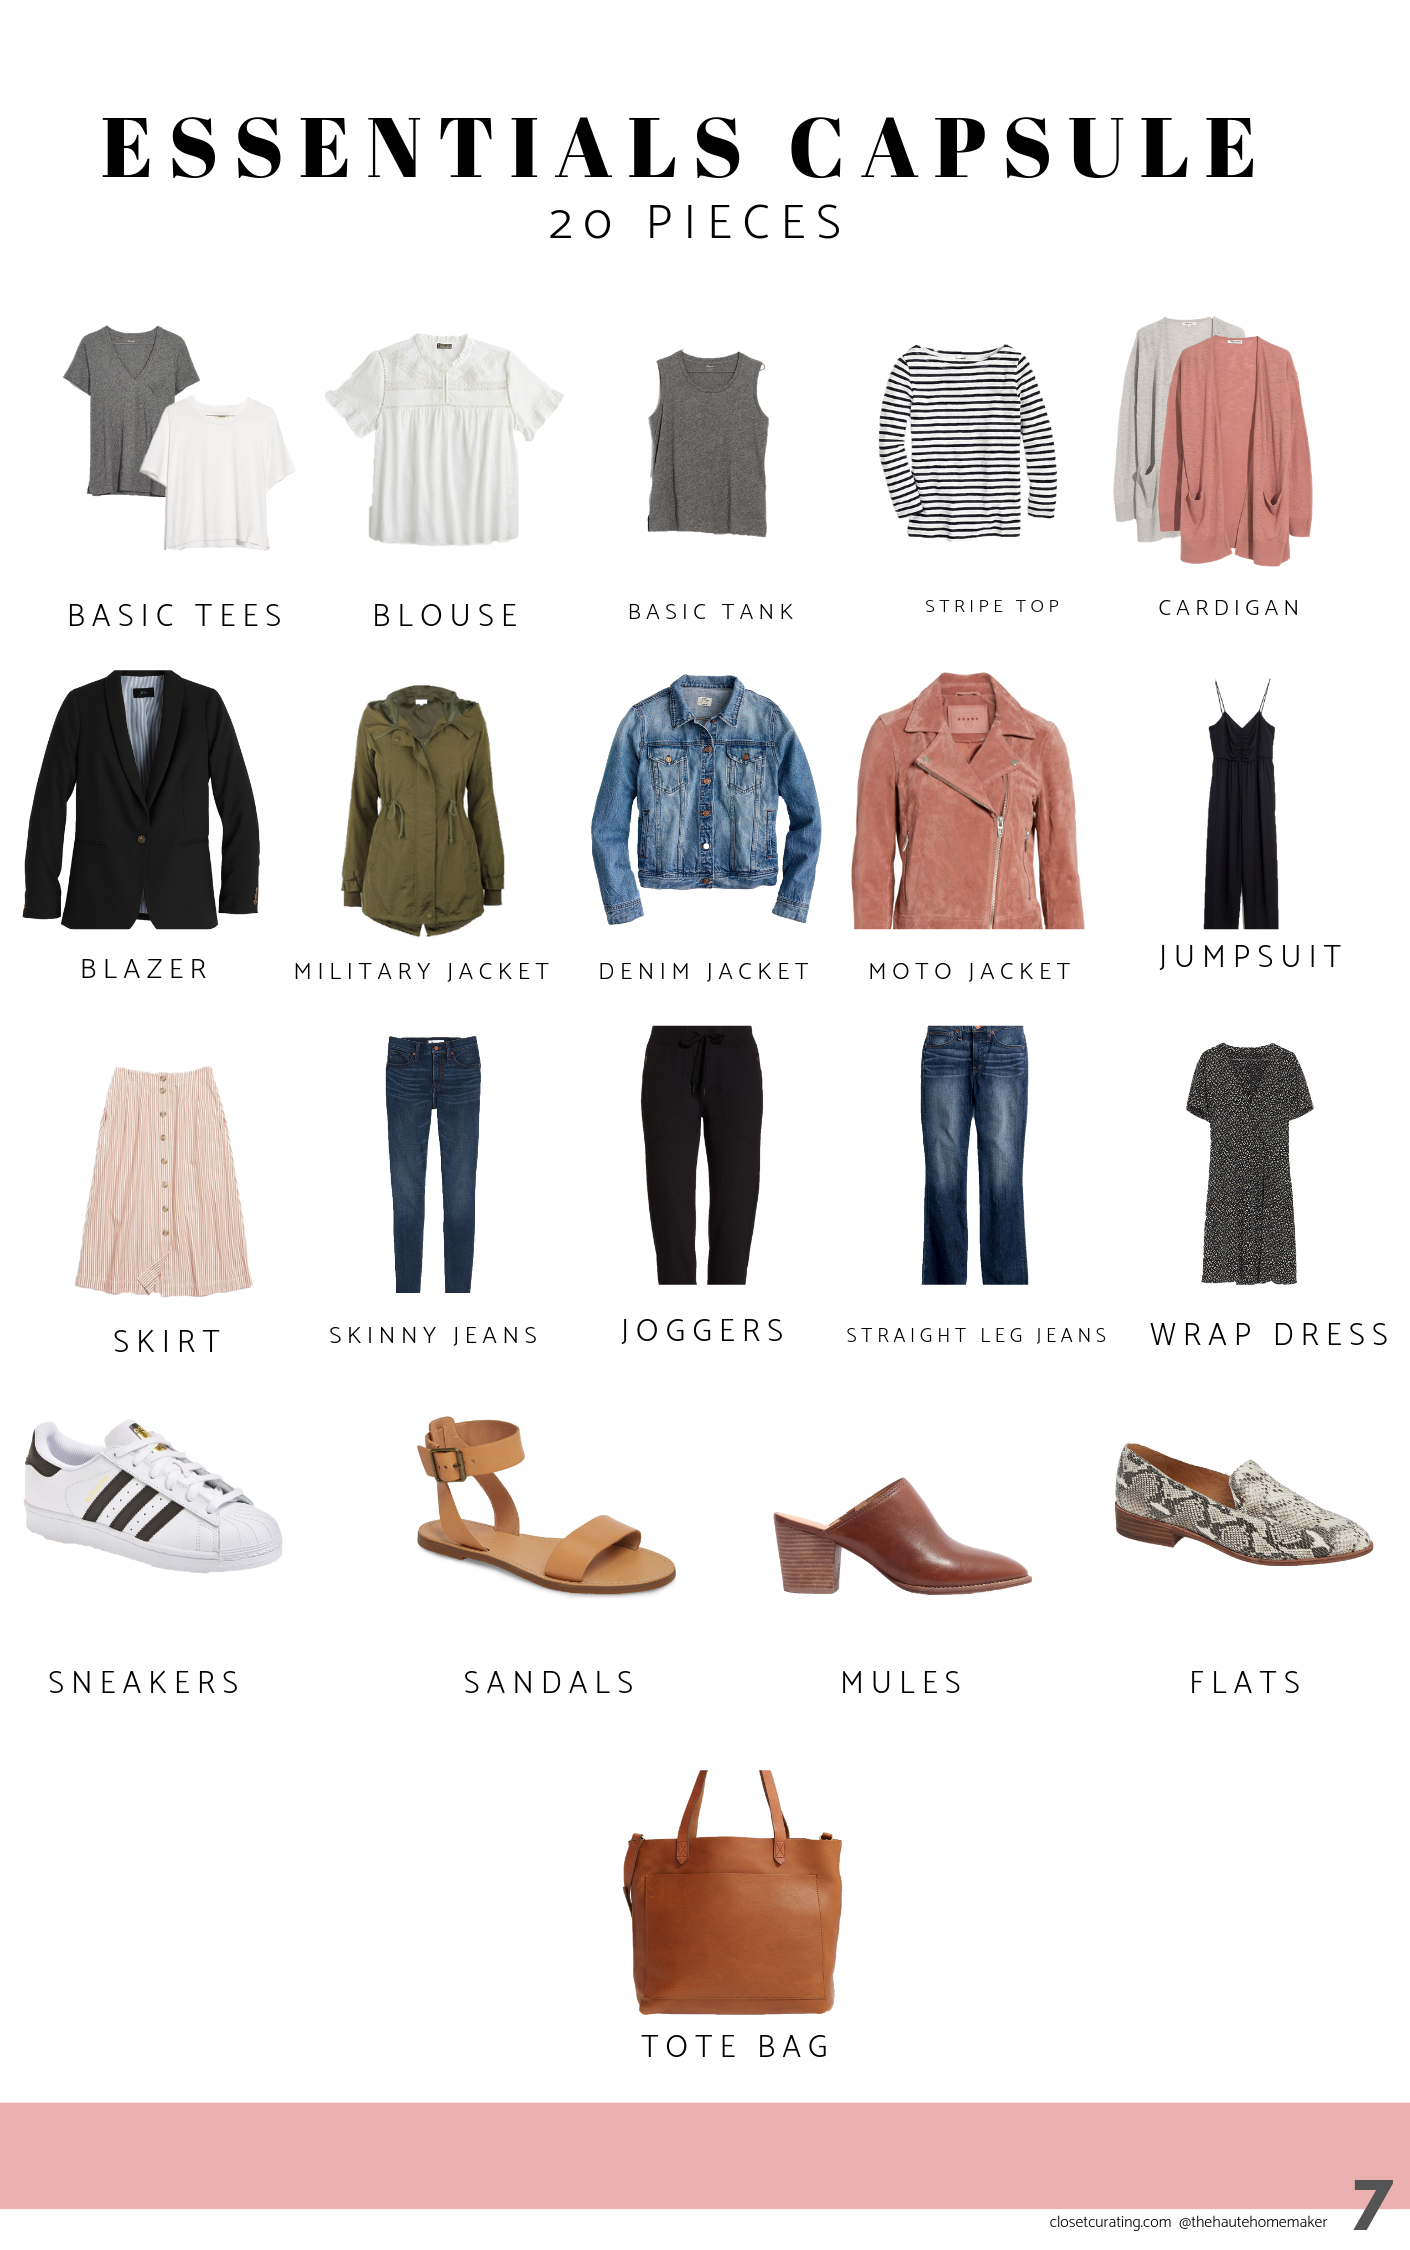 Wardrobe Essentials for Work: A Great Start To Your Working Wardrobe